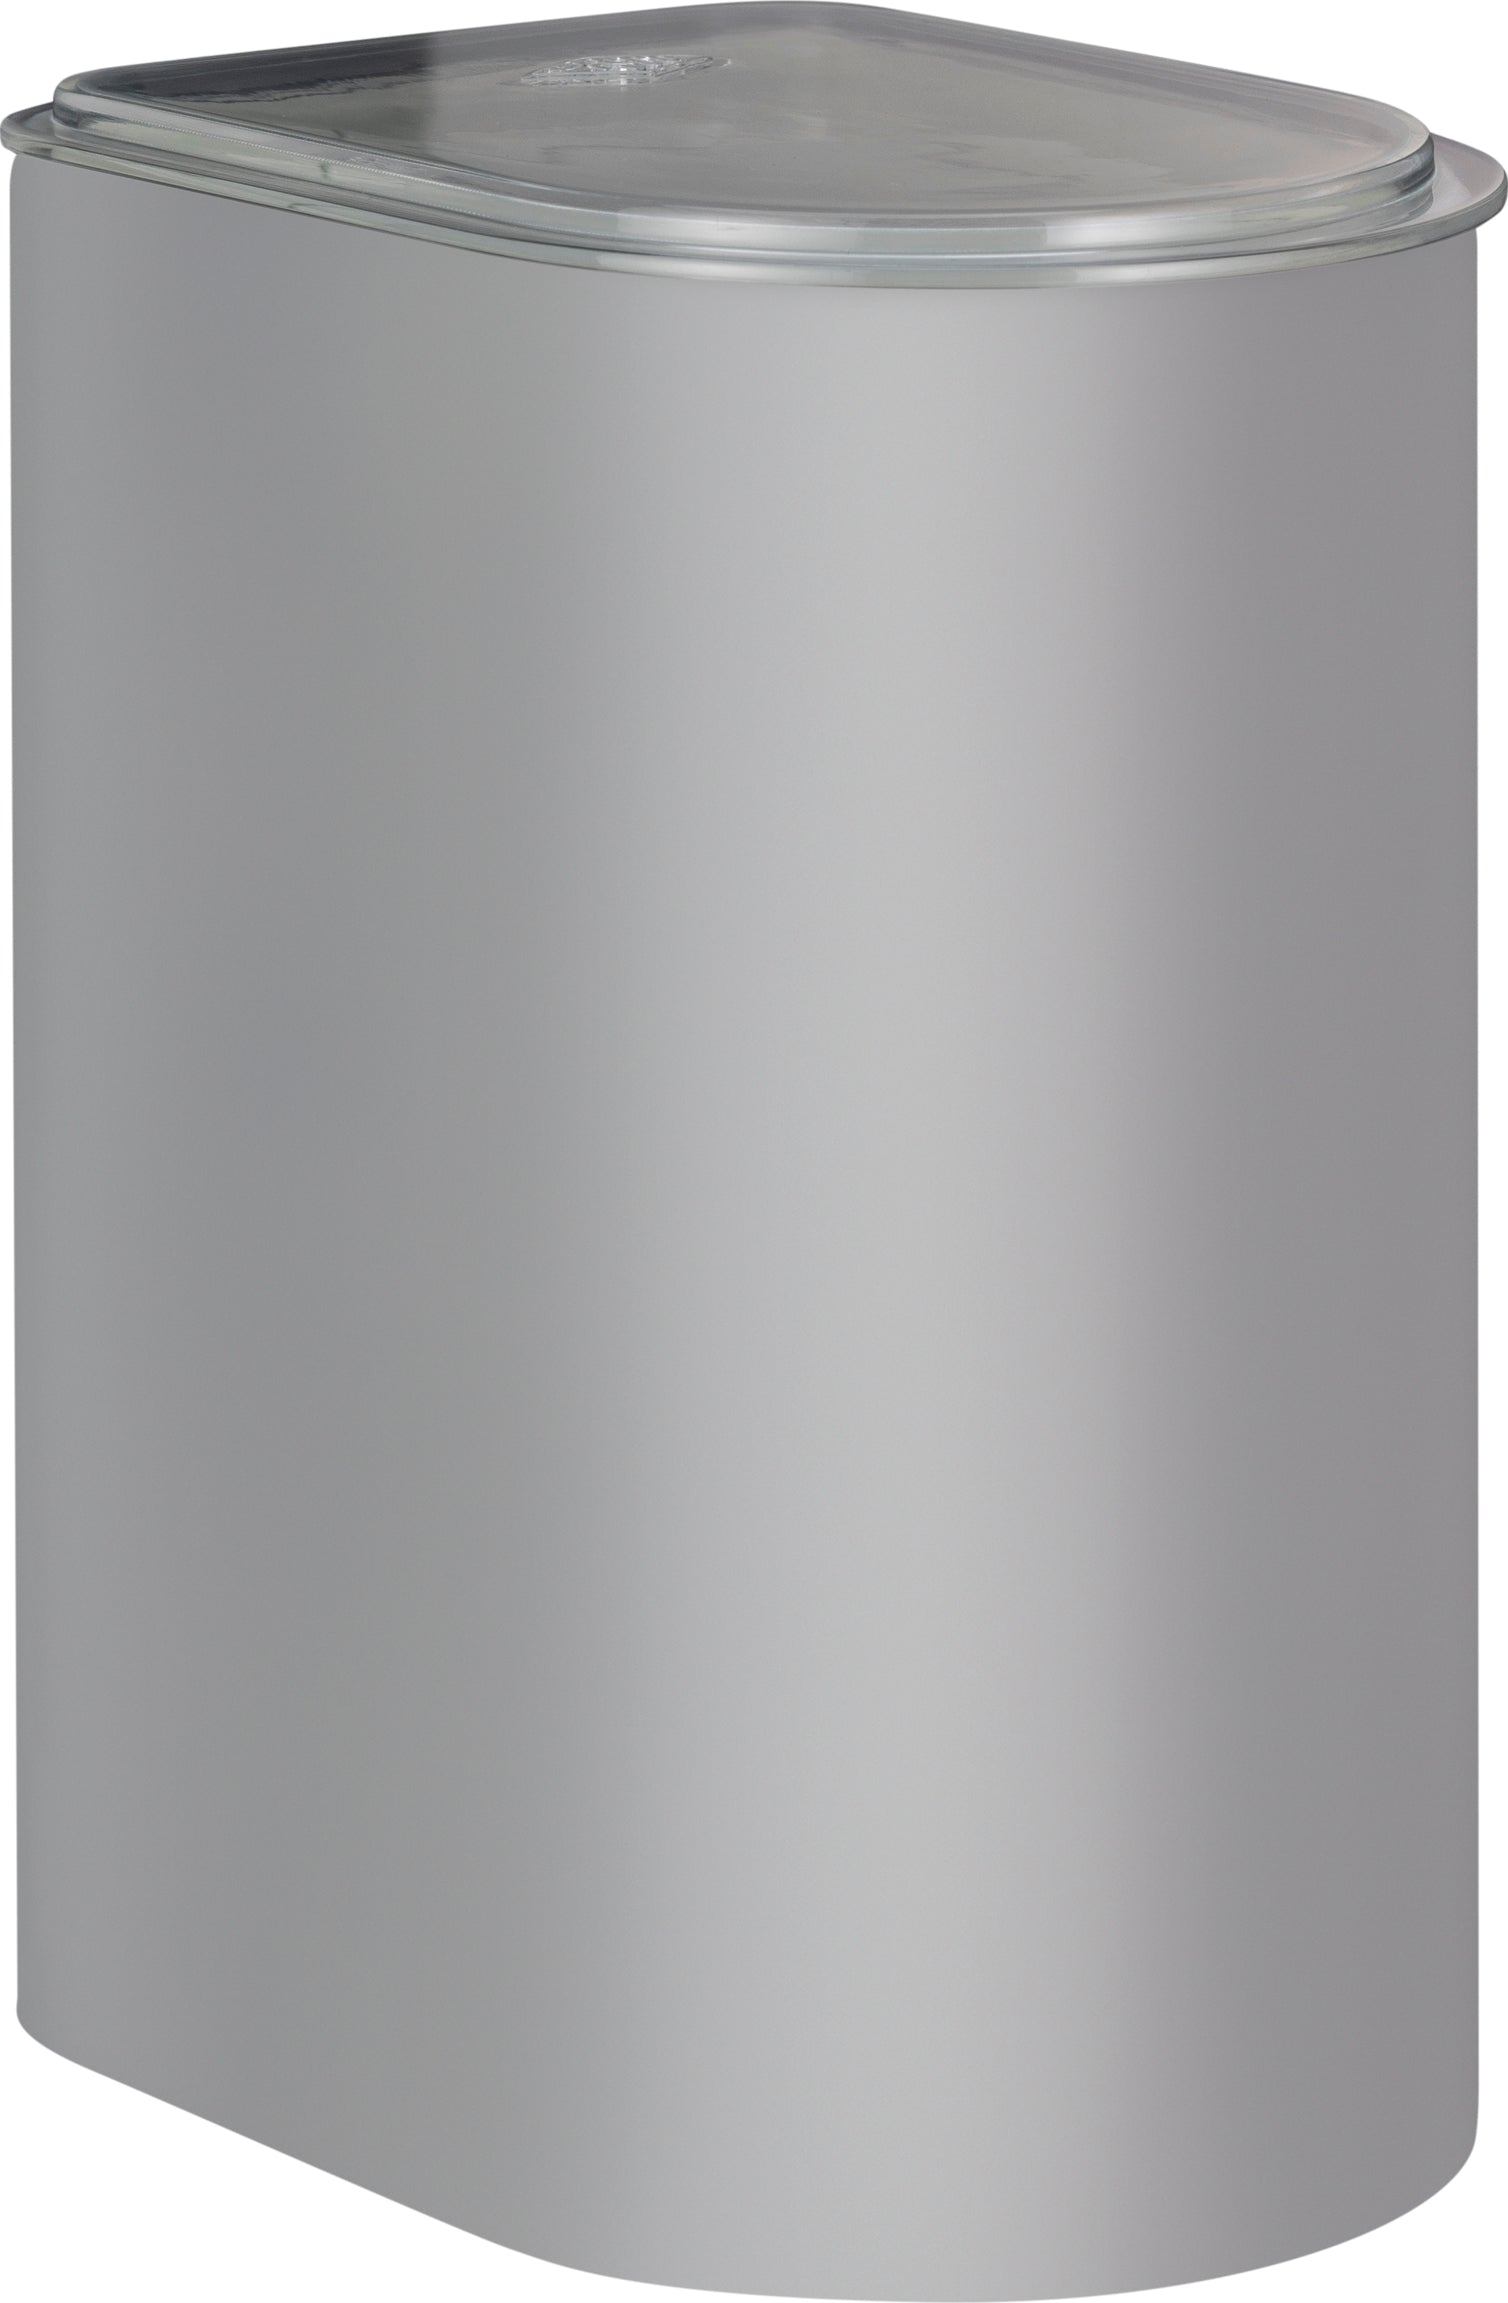 Wesco Dåse 3 liter med akryllåg, kølig grå matt